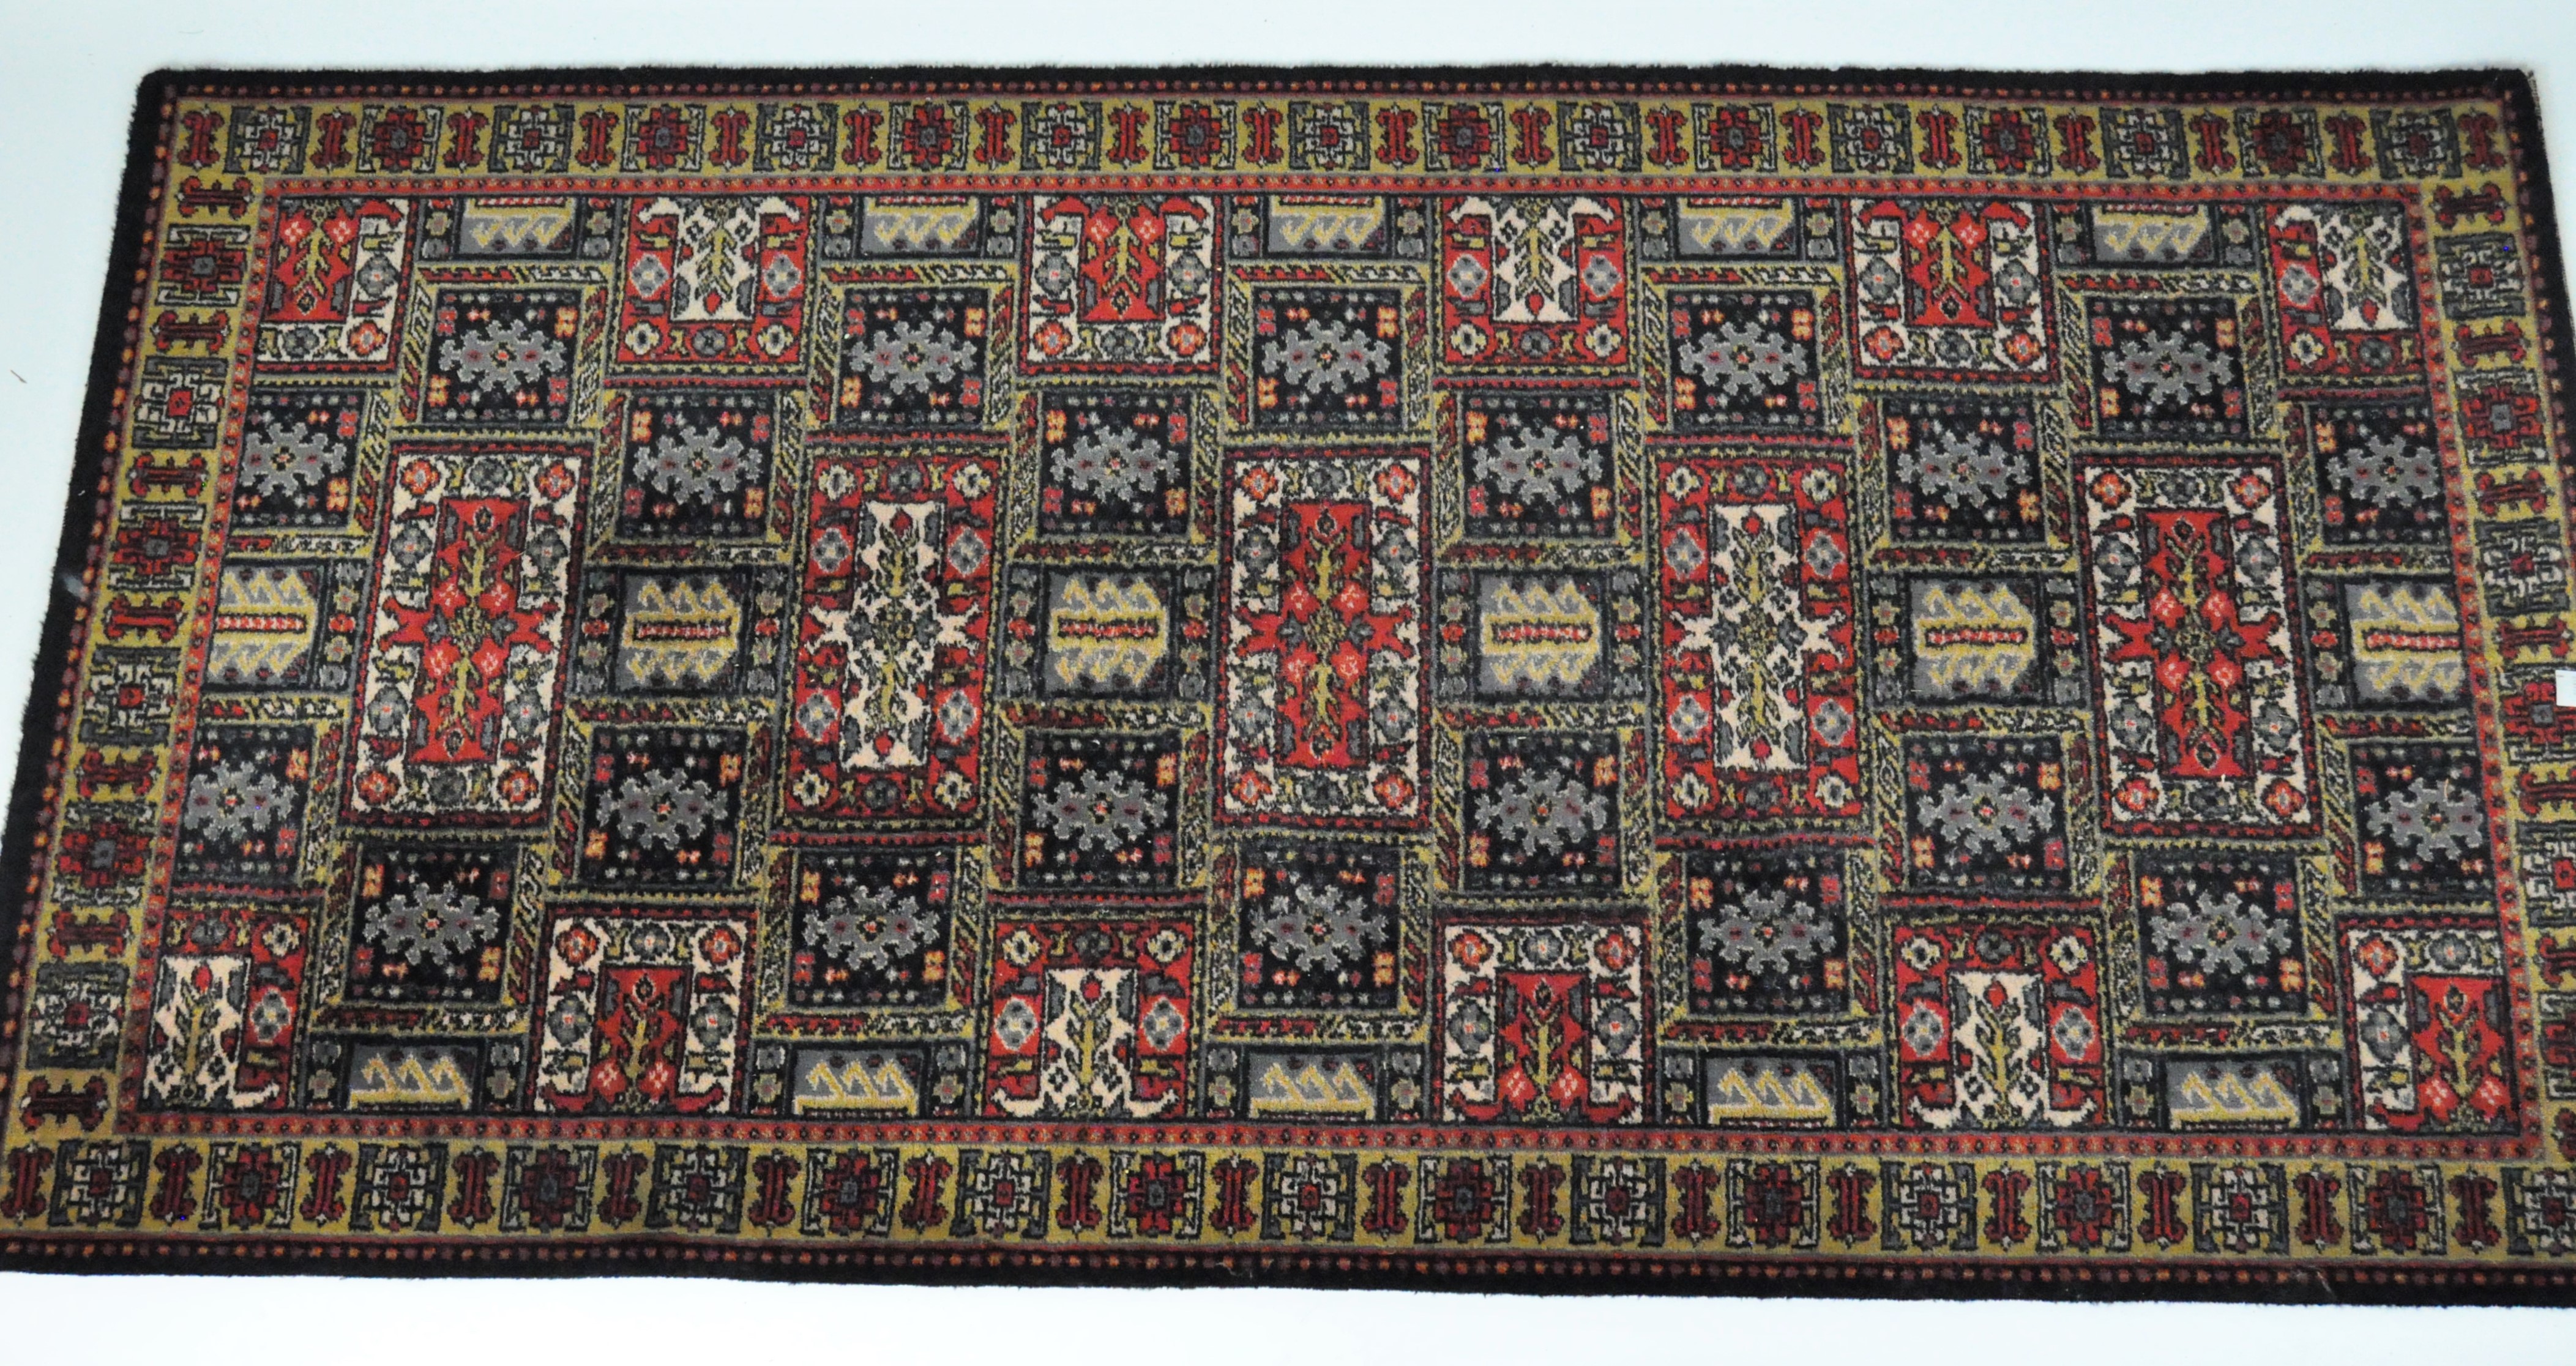 A 20th century floor rug, geometric patterns,